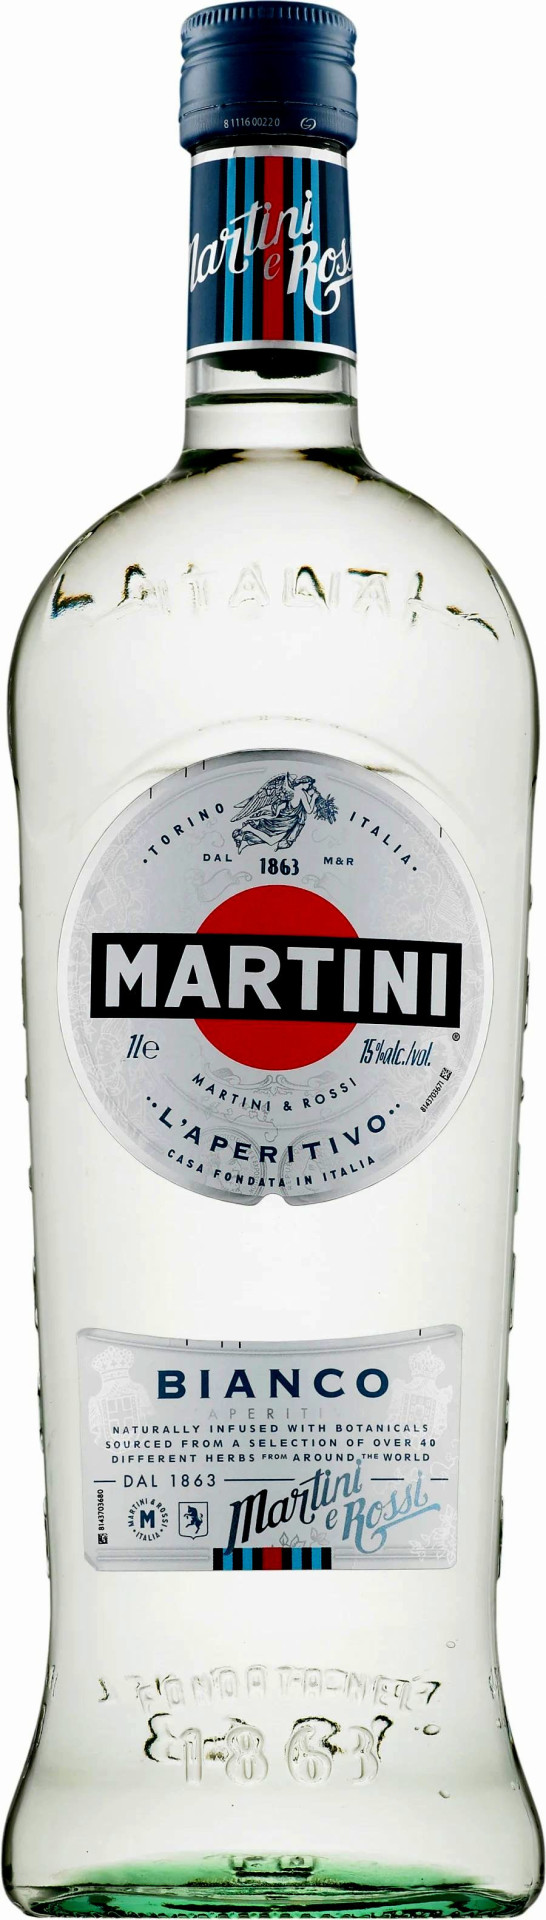 Martini Bianco 0,5l